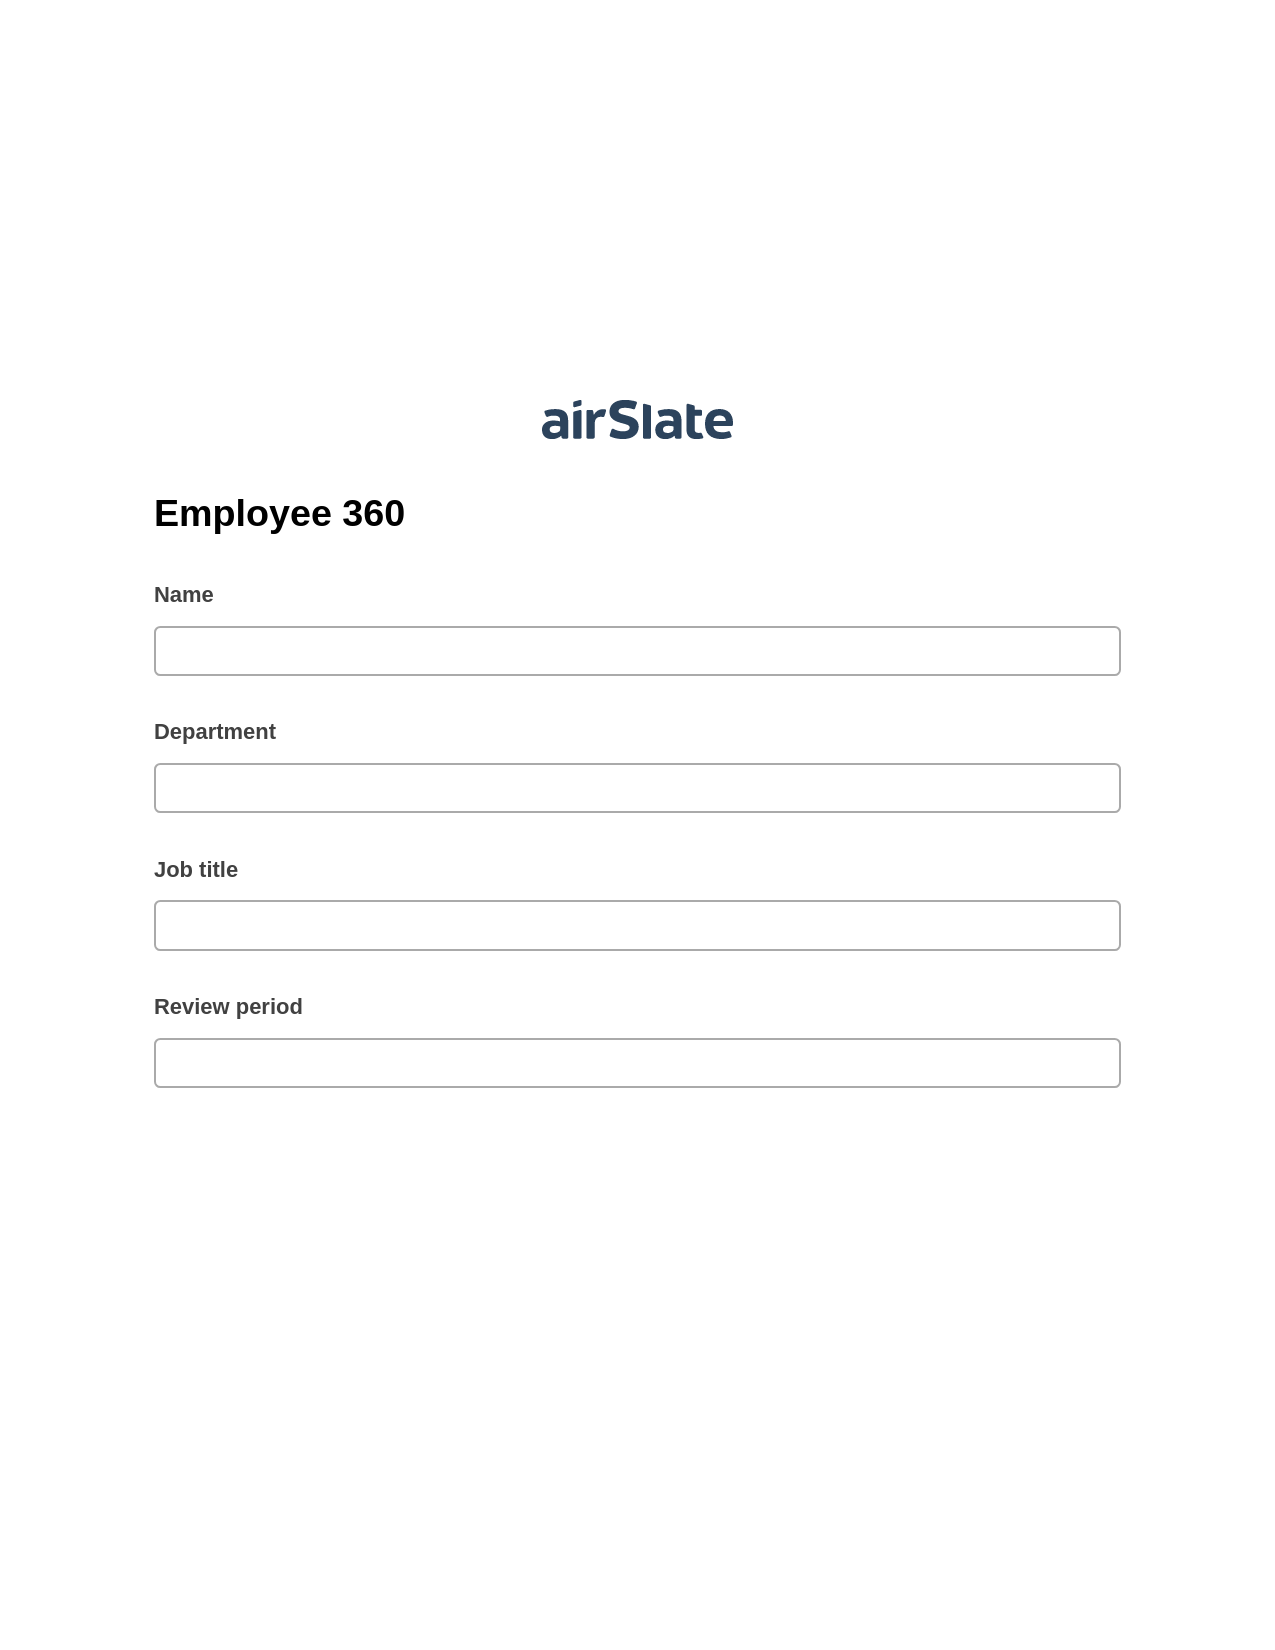 Employee 360 Prefill from NetSuite records, Google Calendar Bot, Archive to SharePoint Folder Bot